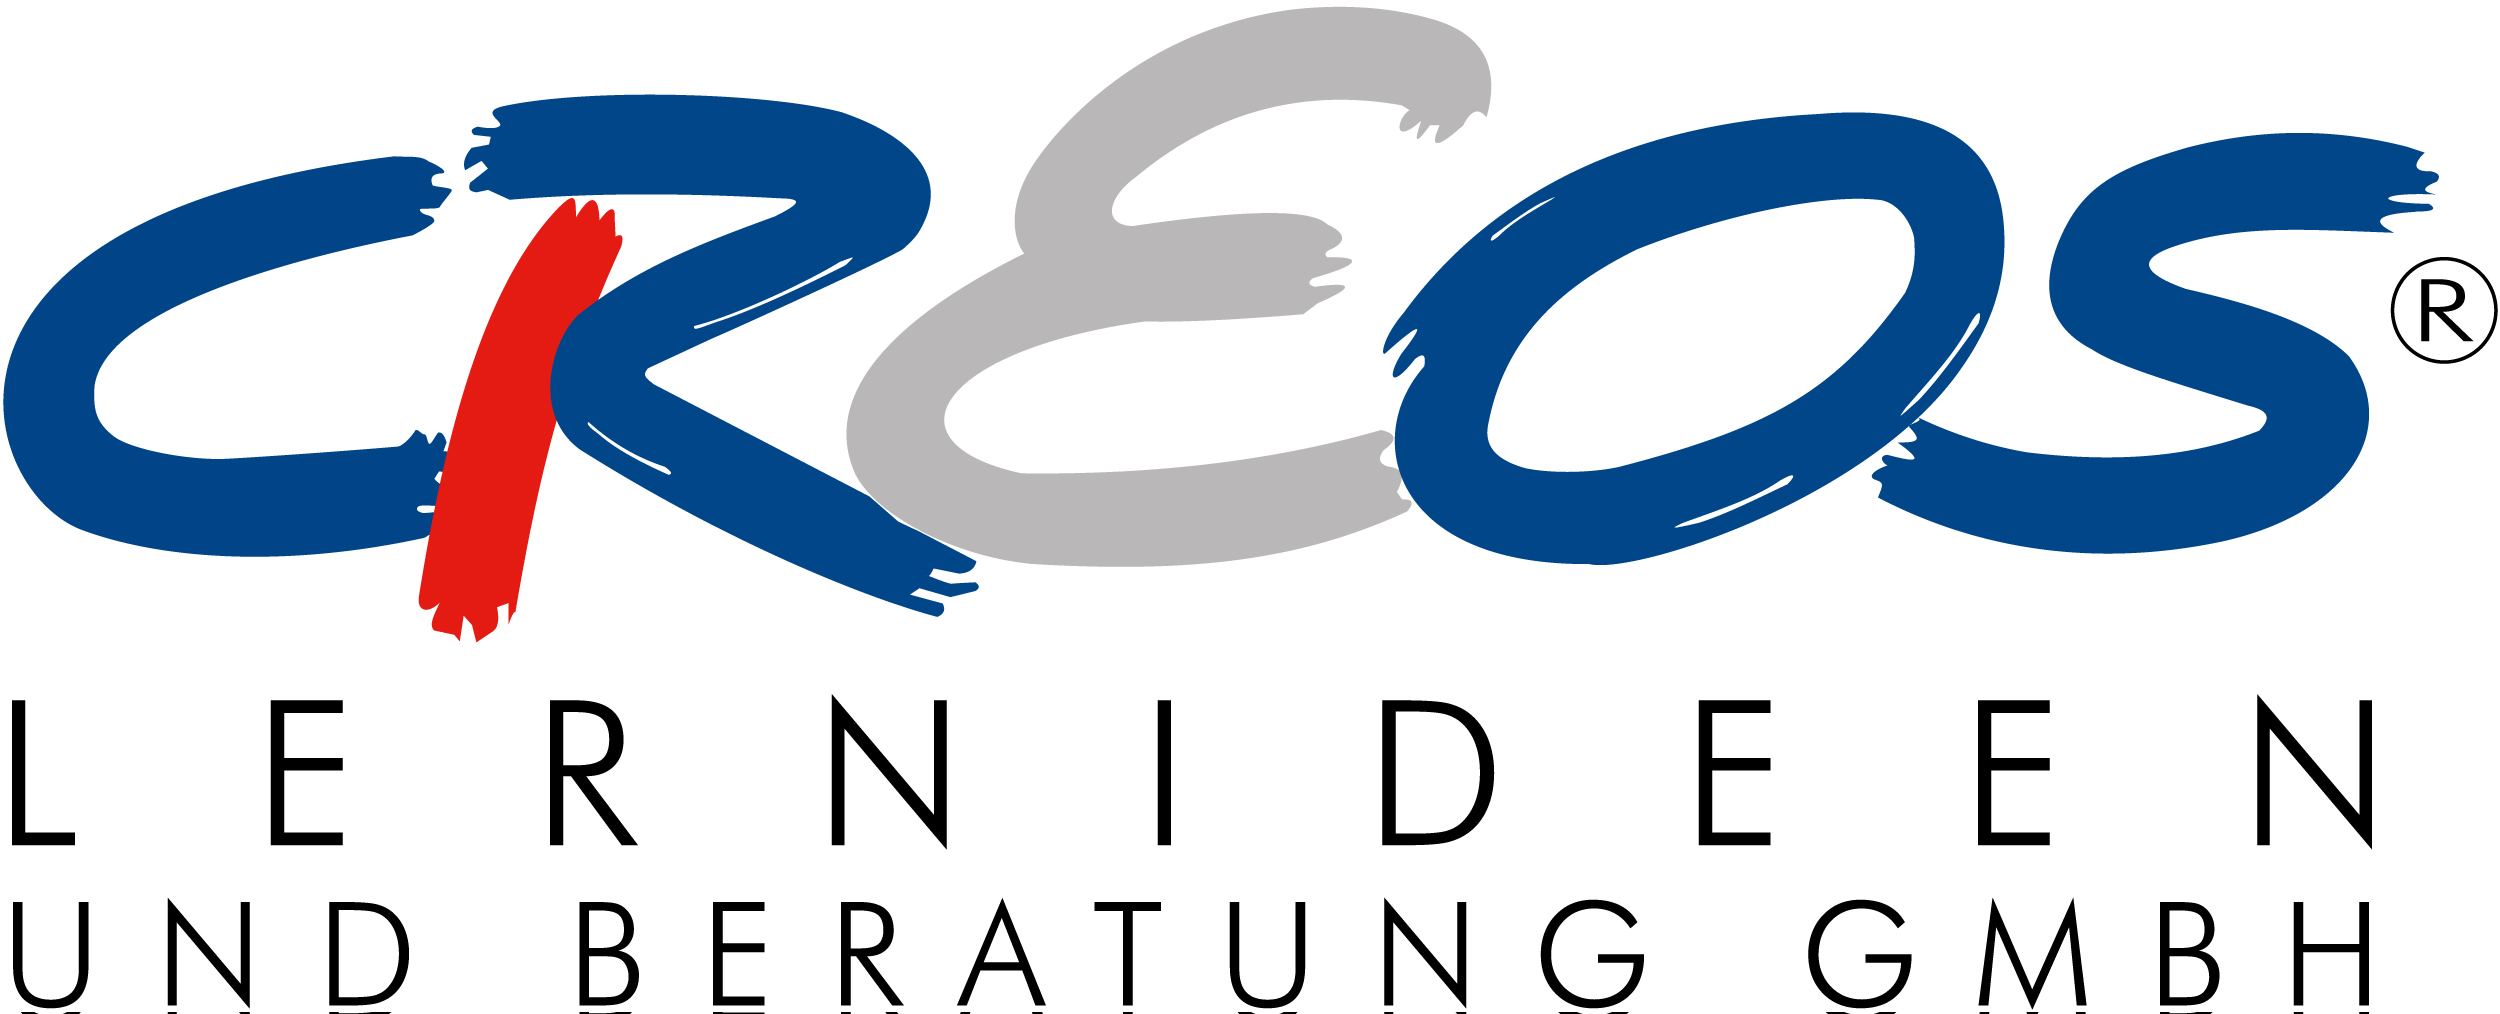 Creos Lernideen und Beratung GmbH